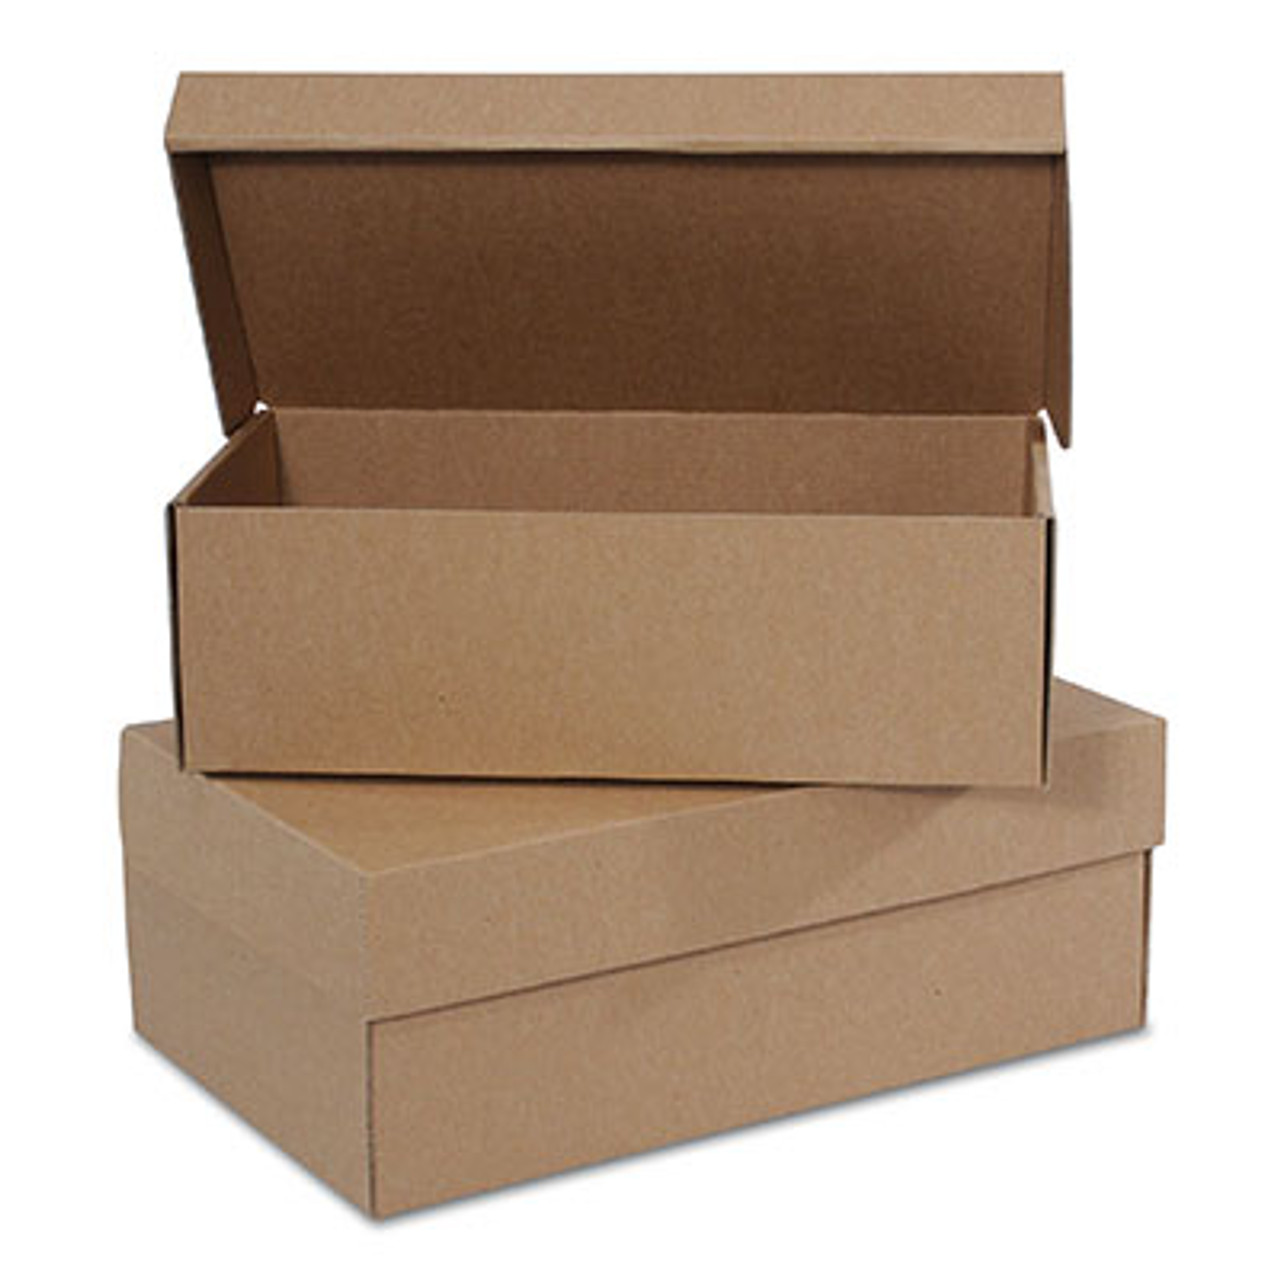 Shoe Box - Kraft (32-lb. ECT) (Qty) 25 Items